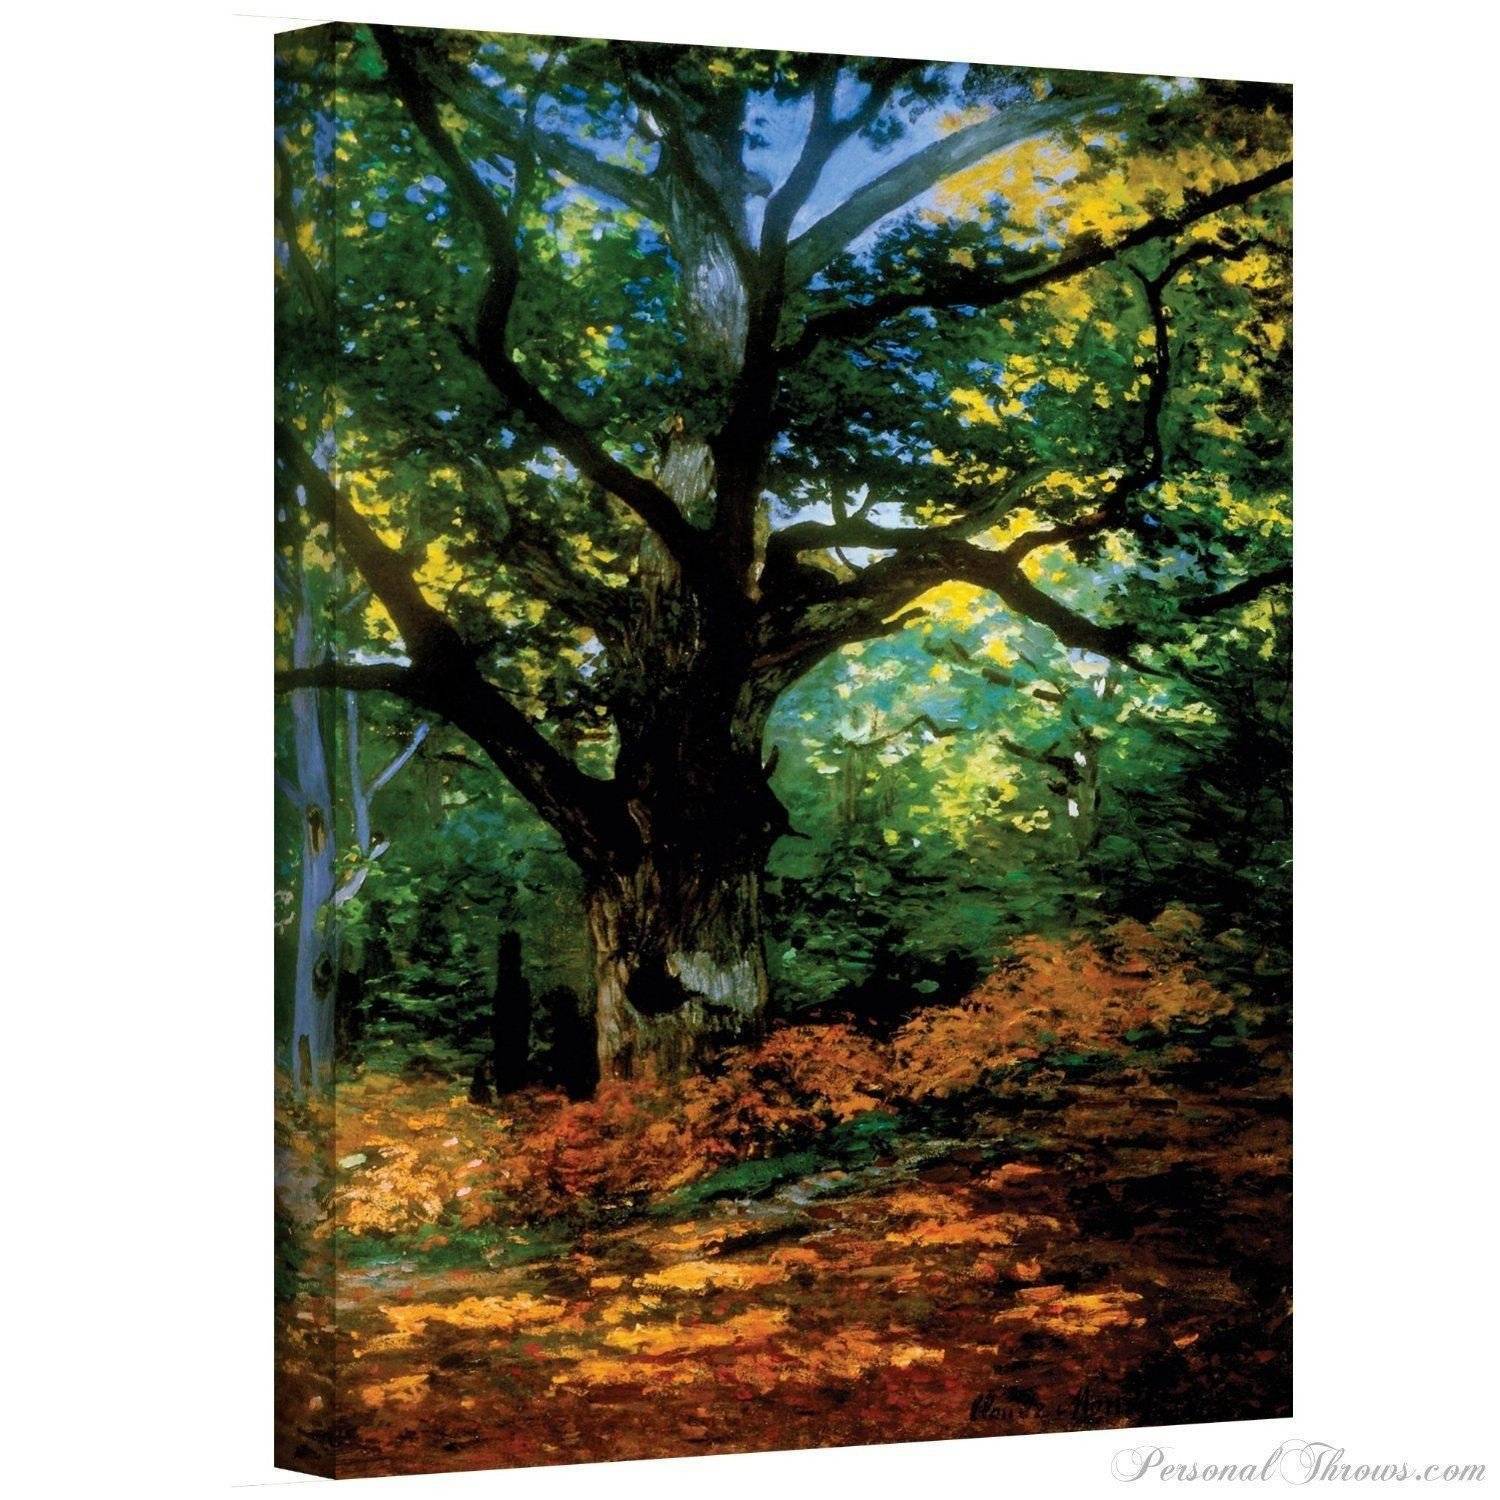 Designer Gifts - Claude Monet, "Bodmer Oak At Fountainbleau Forest" Canvas Gallery Wrap Print